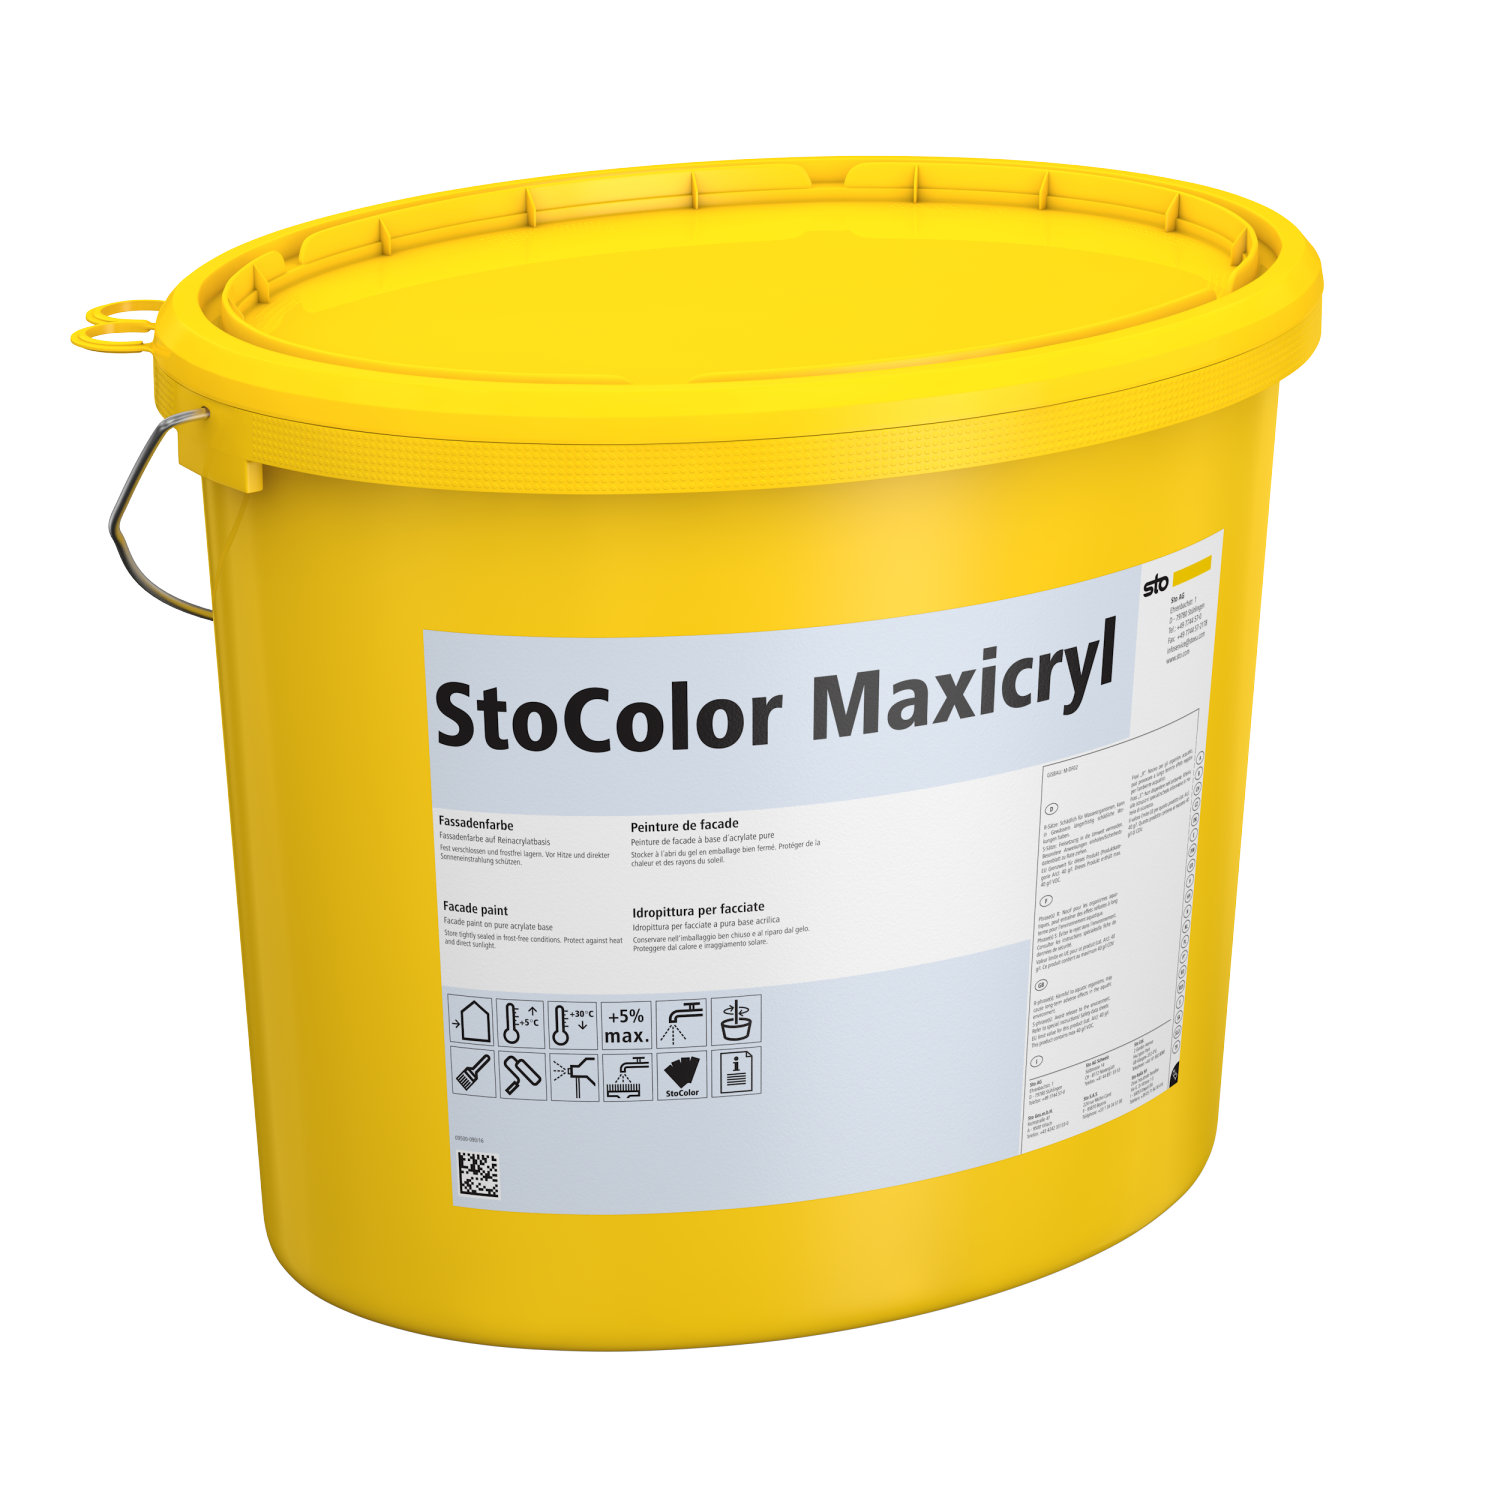 StoColorMaxicryl-1.jpeg